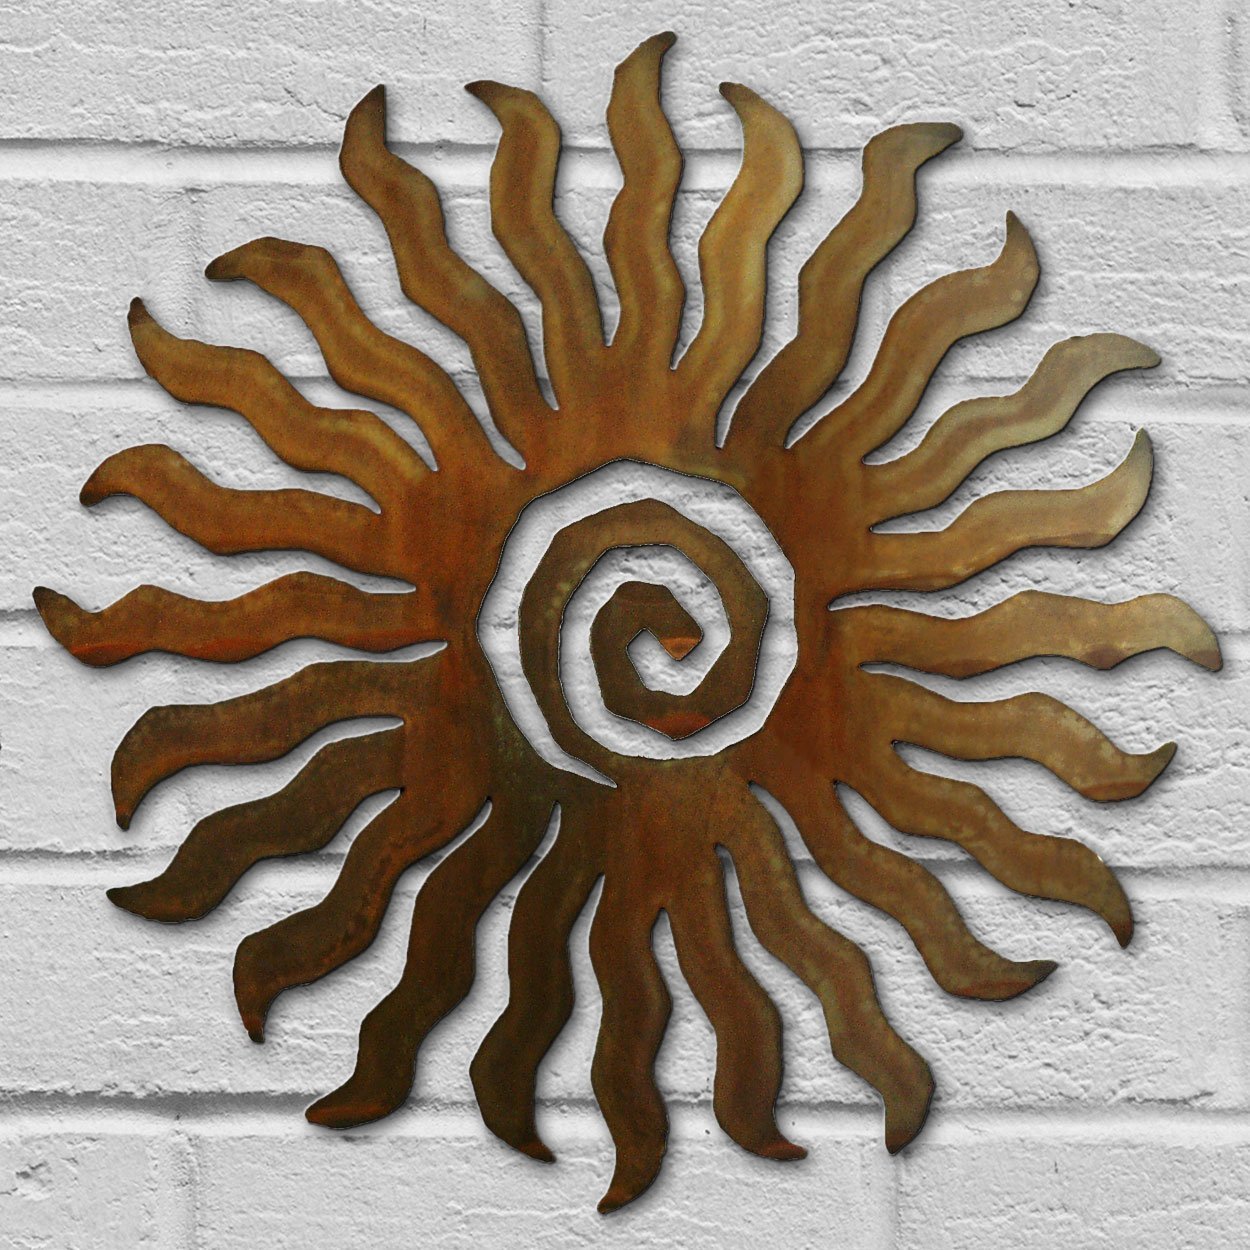 165161 - 12in 24-Ray Sunburst 3D Southwest Metal Wall Art in Rust Finish